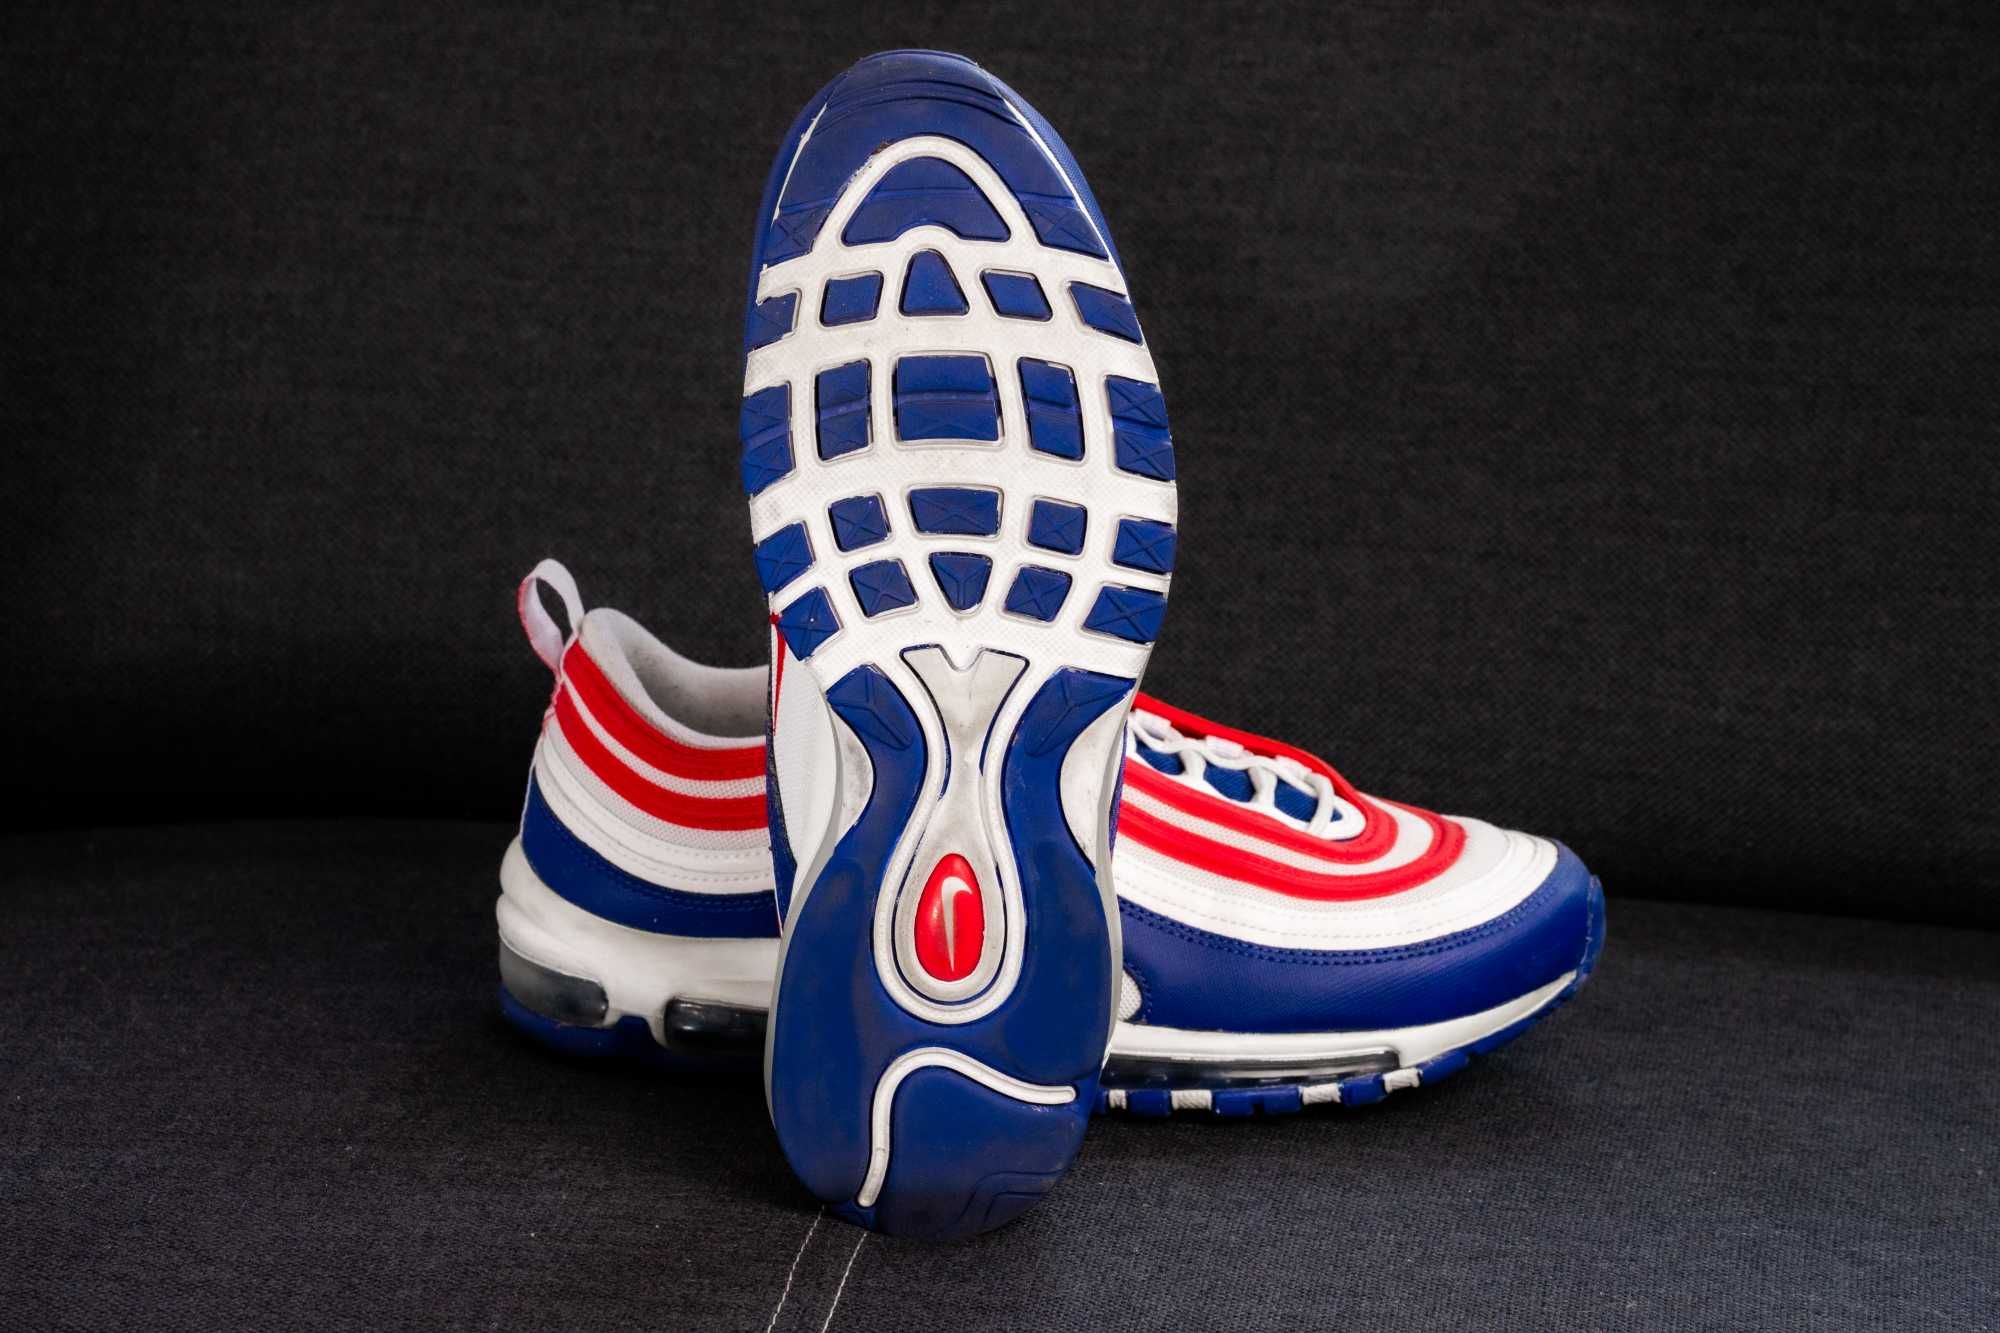 Nike Air Max 97 "USA" Sneakers